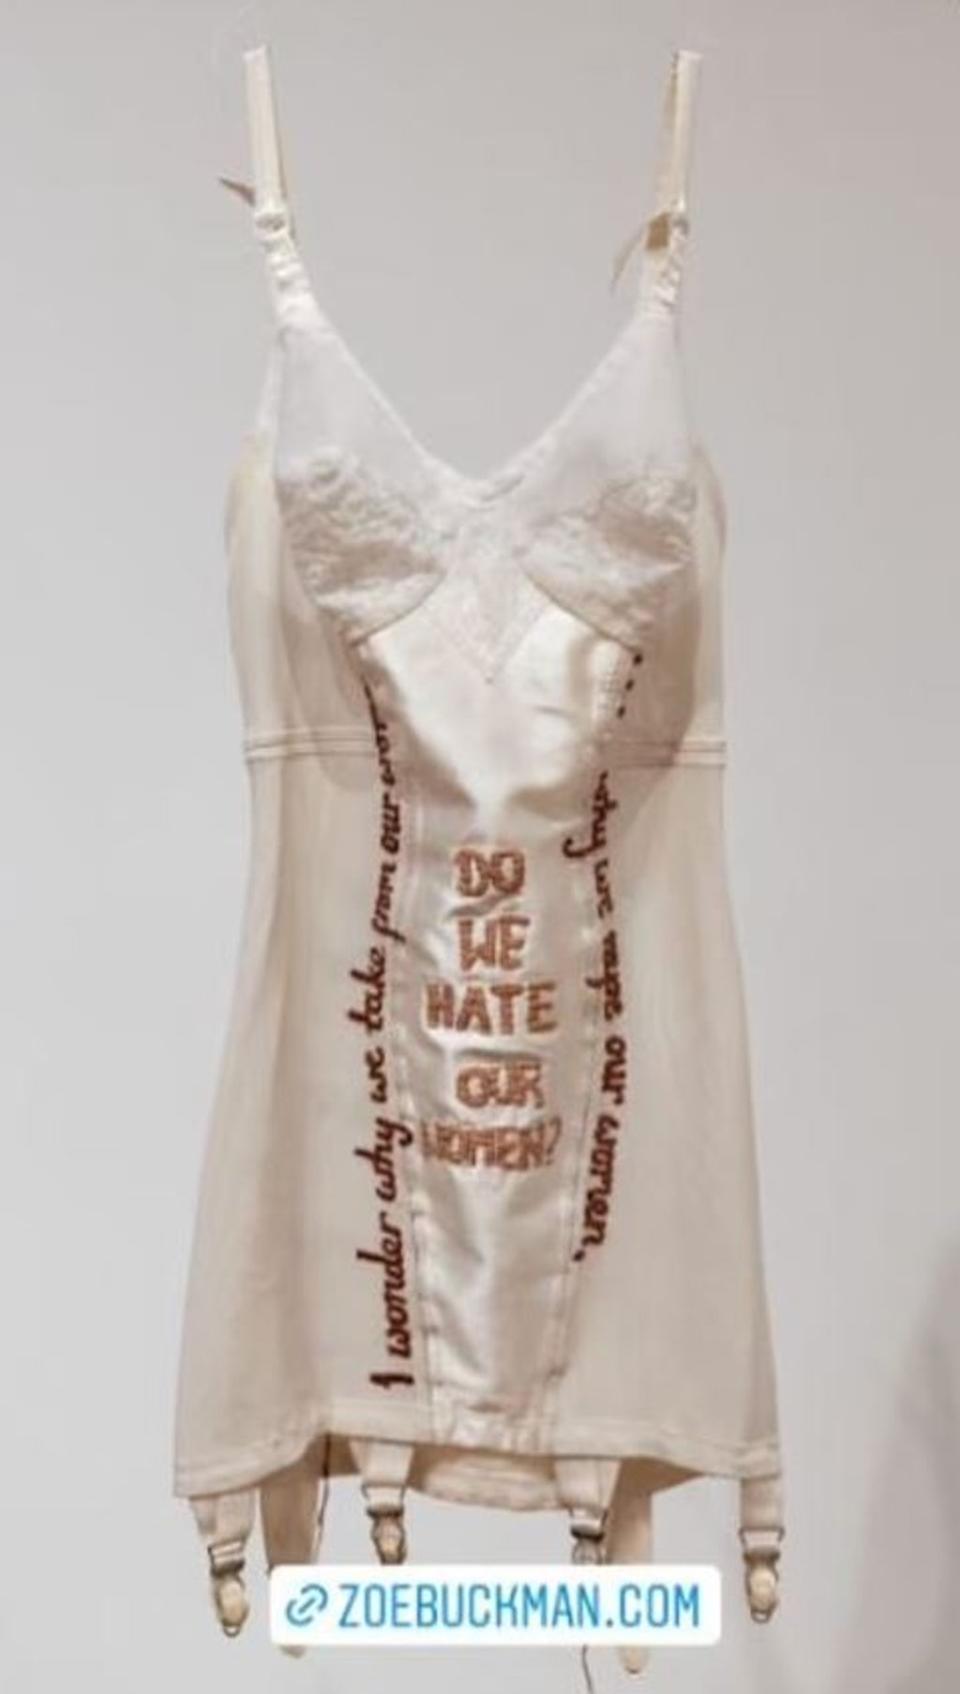 Thandwie Newton shared an image of an embroidered piece of underwear by artist Zoe Buckman (Thandwie Newton / Instagram)